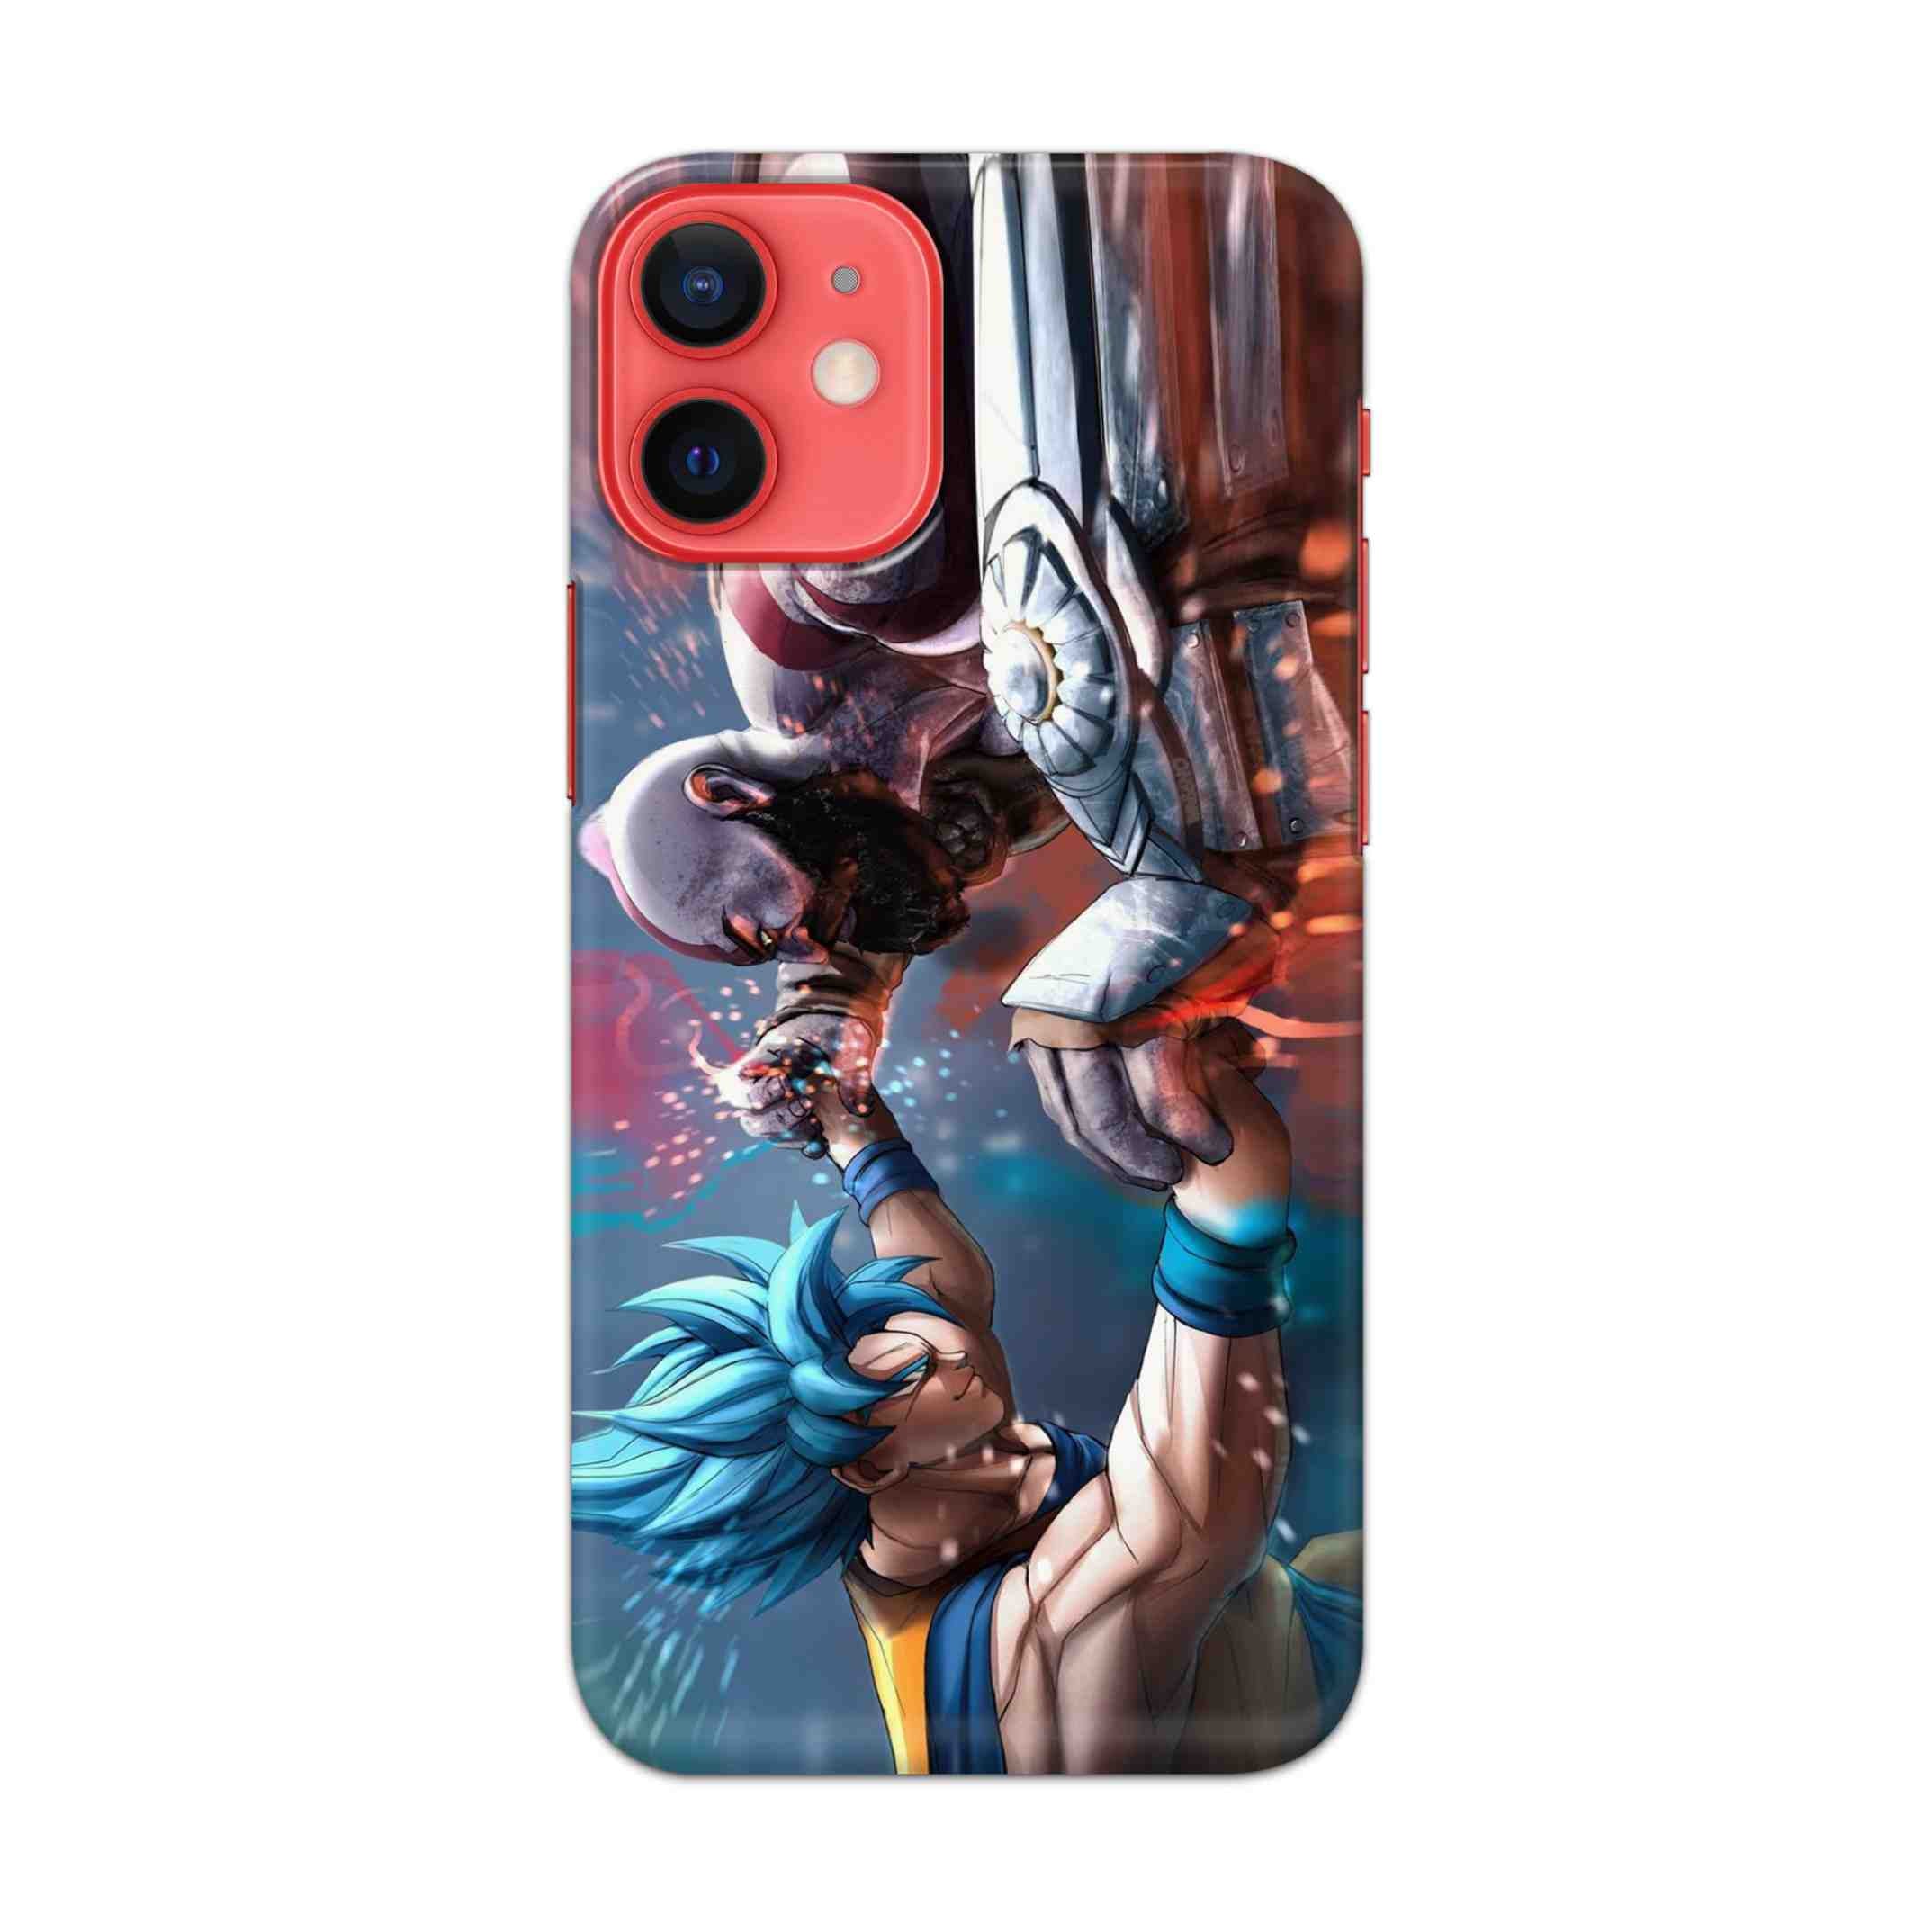 Buy Goku Vs Kratos Hard Back Mobile Phone Case/Cover For Apple iPhone 12 mini Online